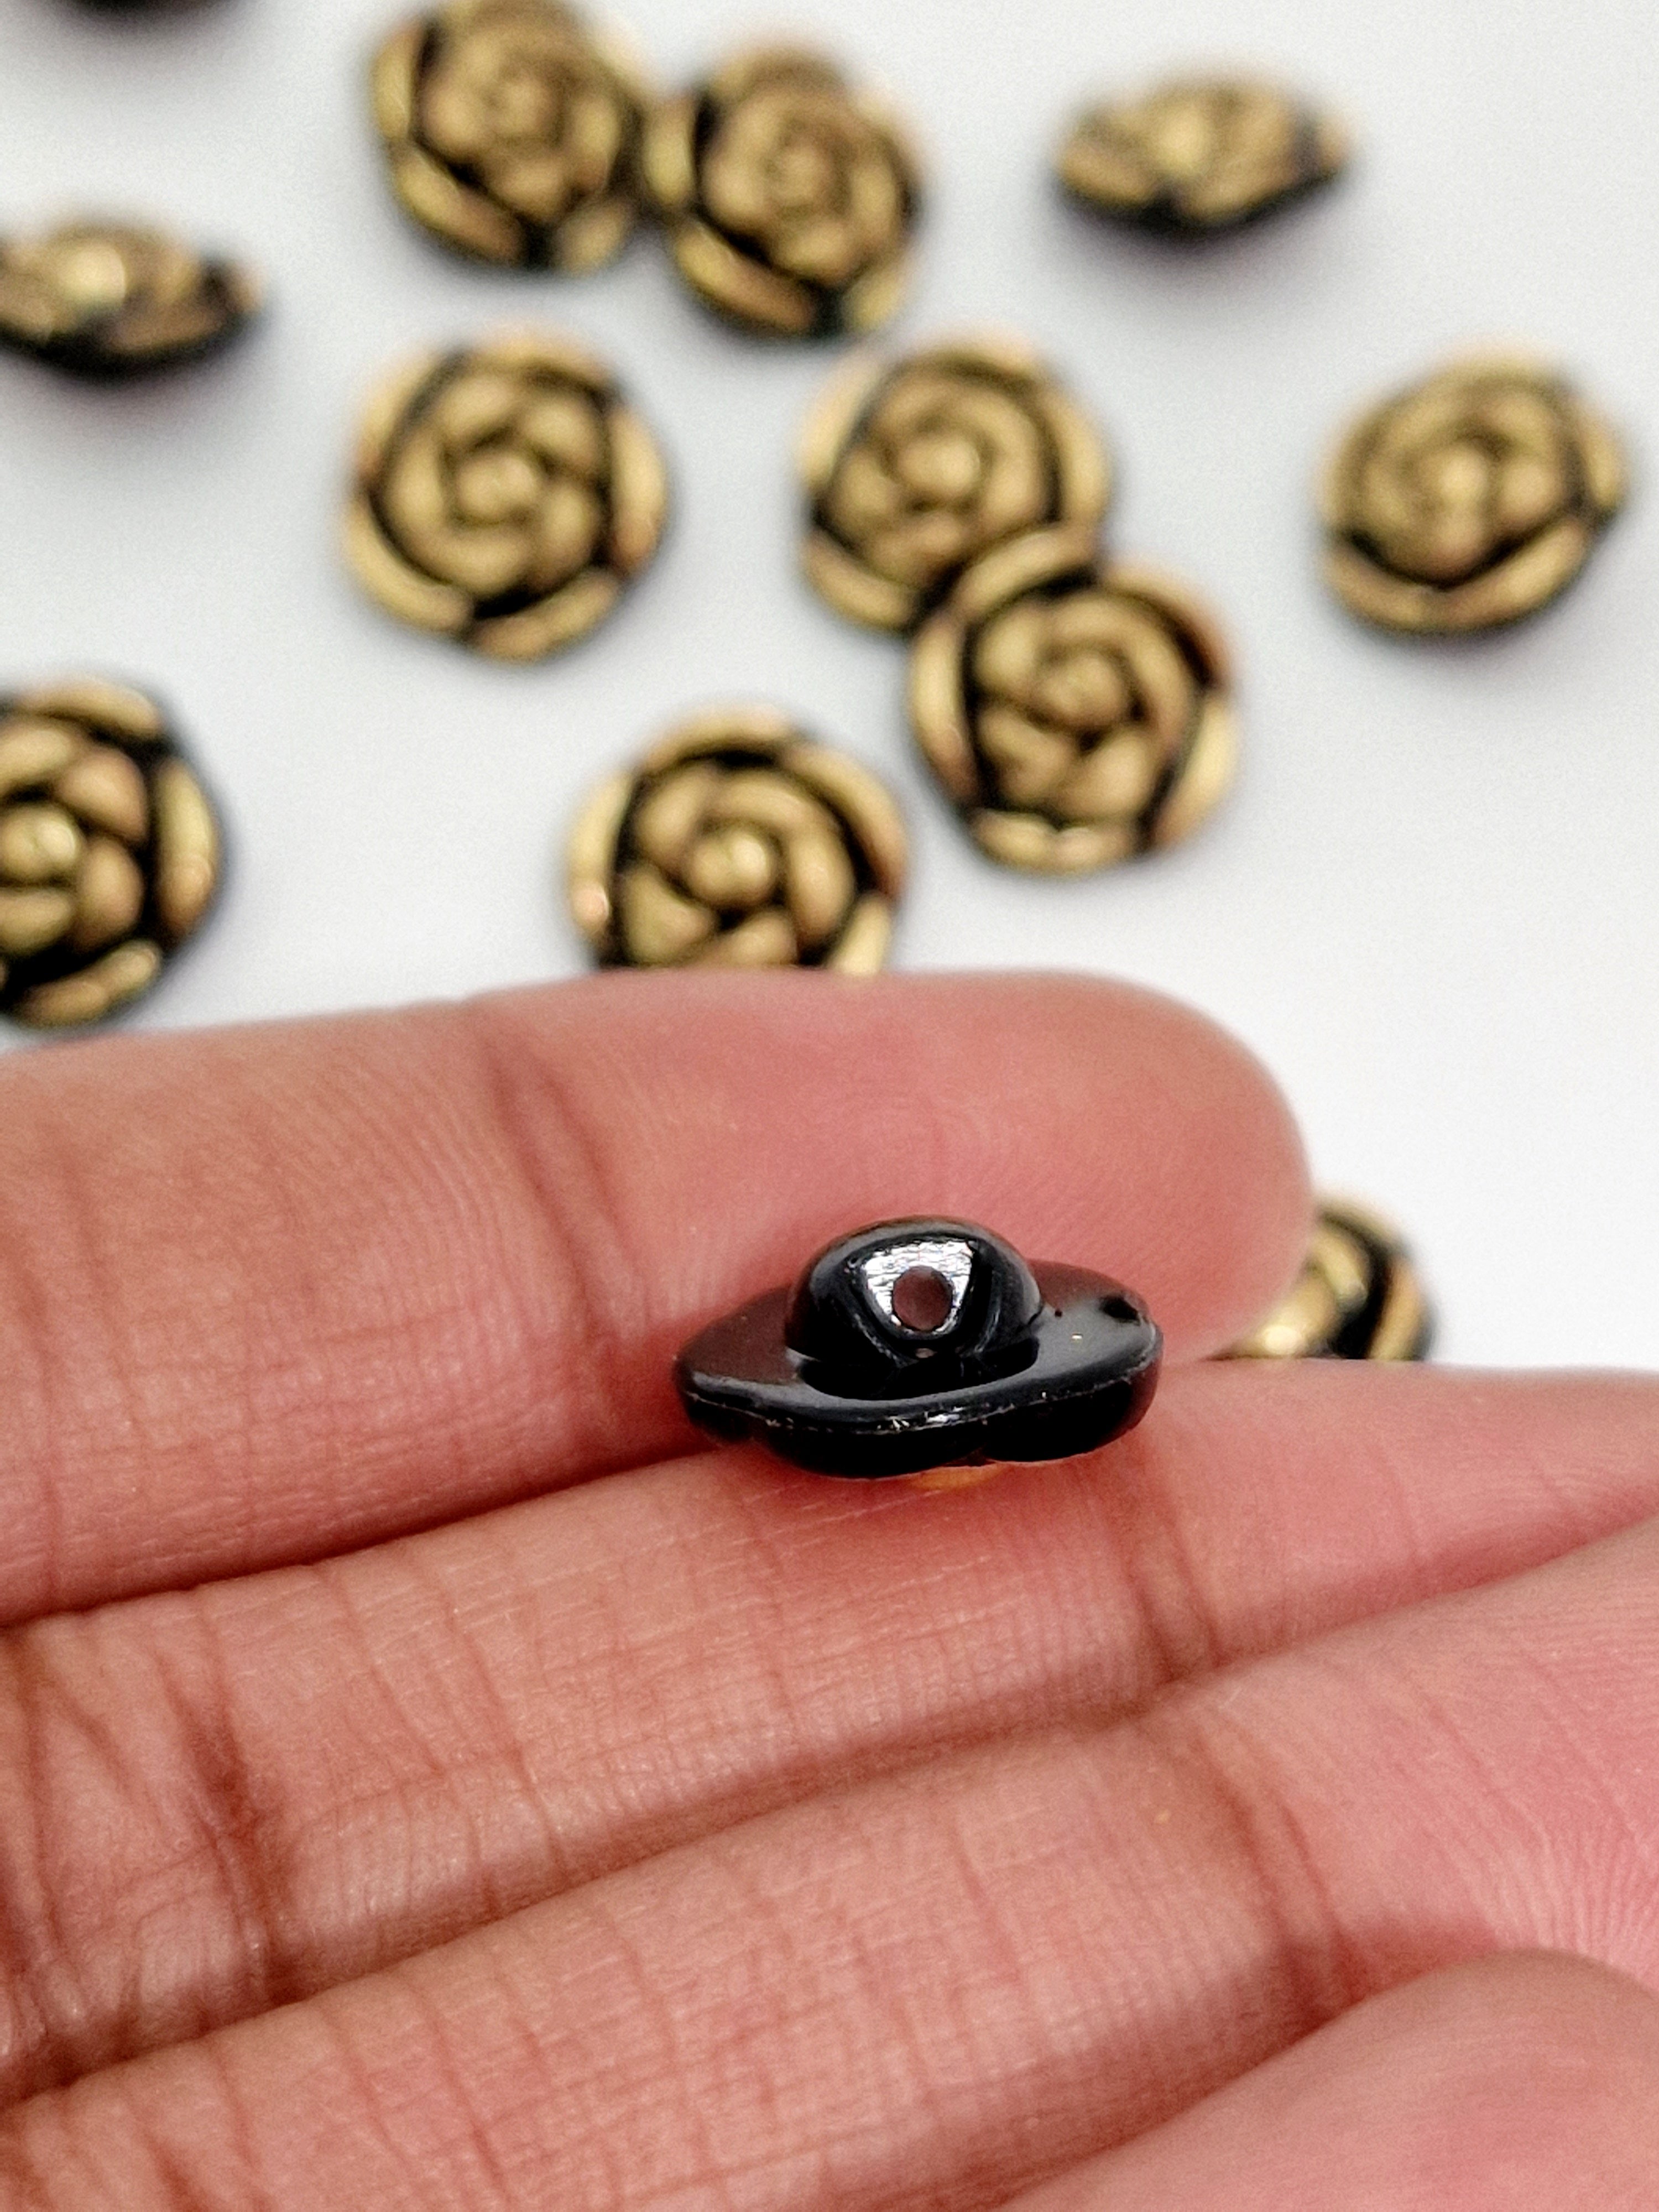 MajorCrafts 40pcs 13mm Black & Gold Rose Flower Shank Resin Sewing Buttons